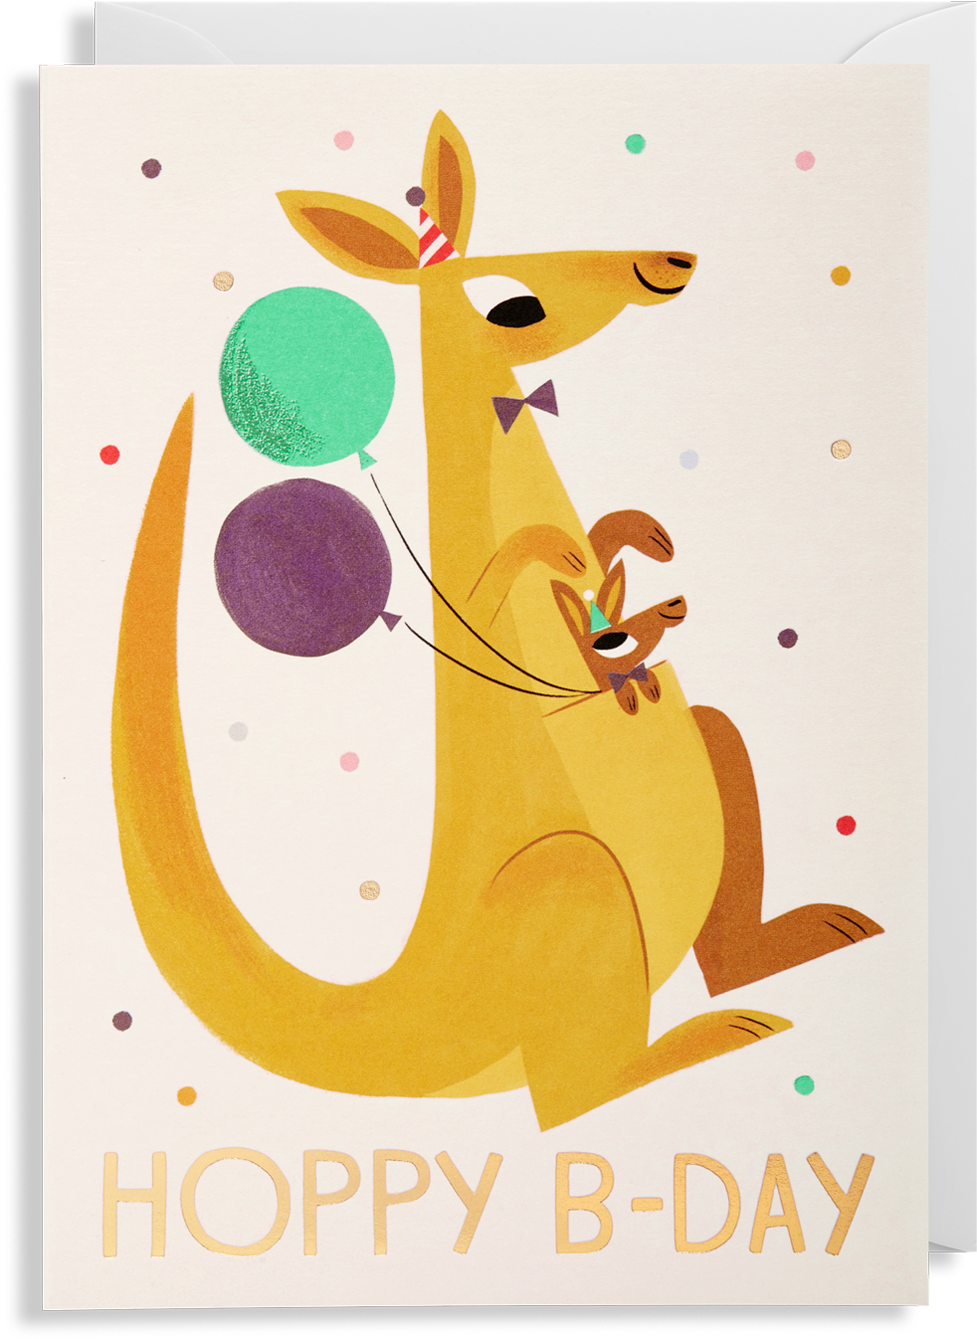 Hoppy Bday Kangaroo Greeting Card - Allison Black - Hoppy Bday Kangaroo Card By Lagom (1400x1500)